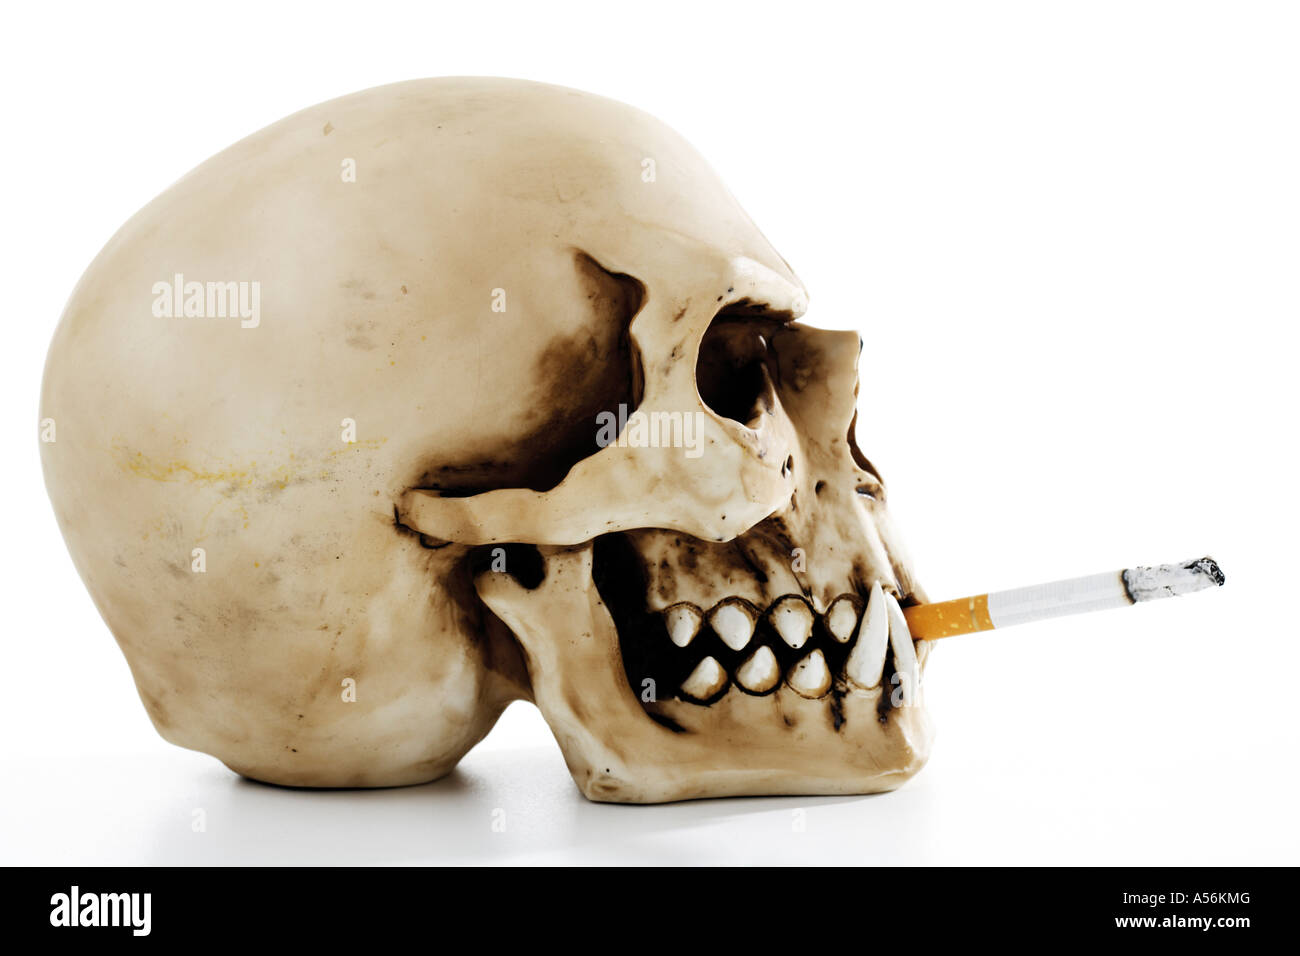 skeleton smoking a cigarette cartoon